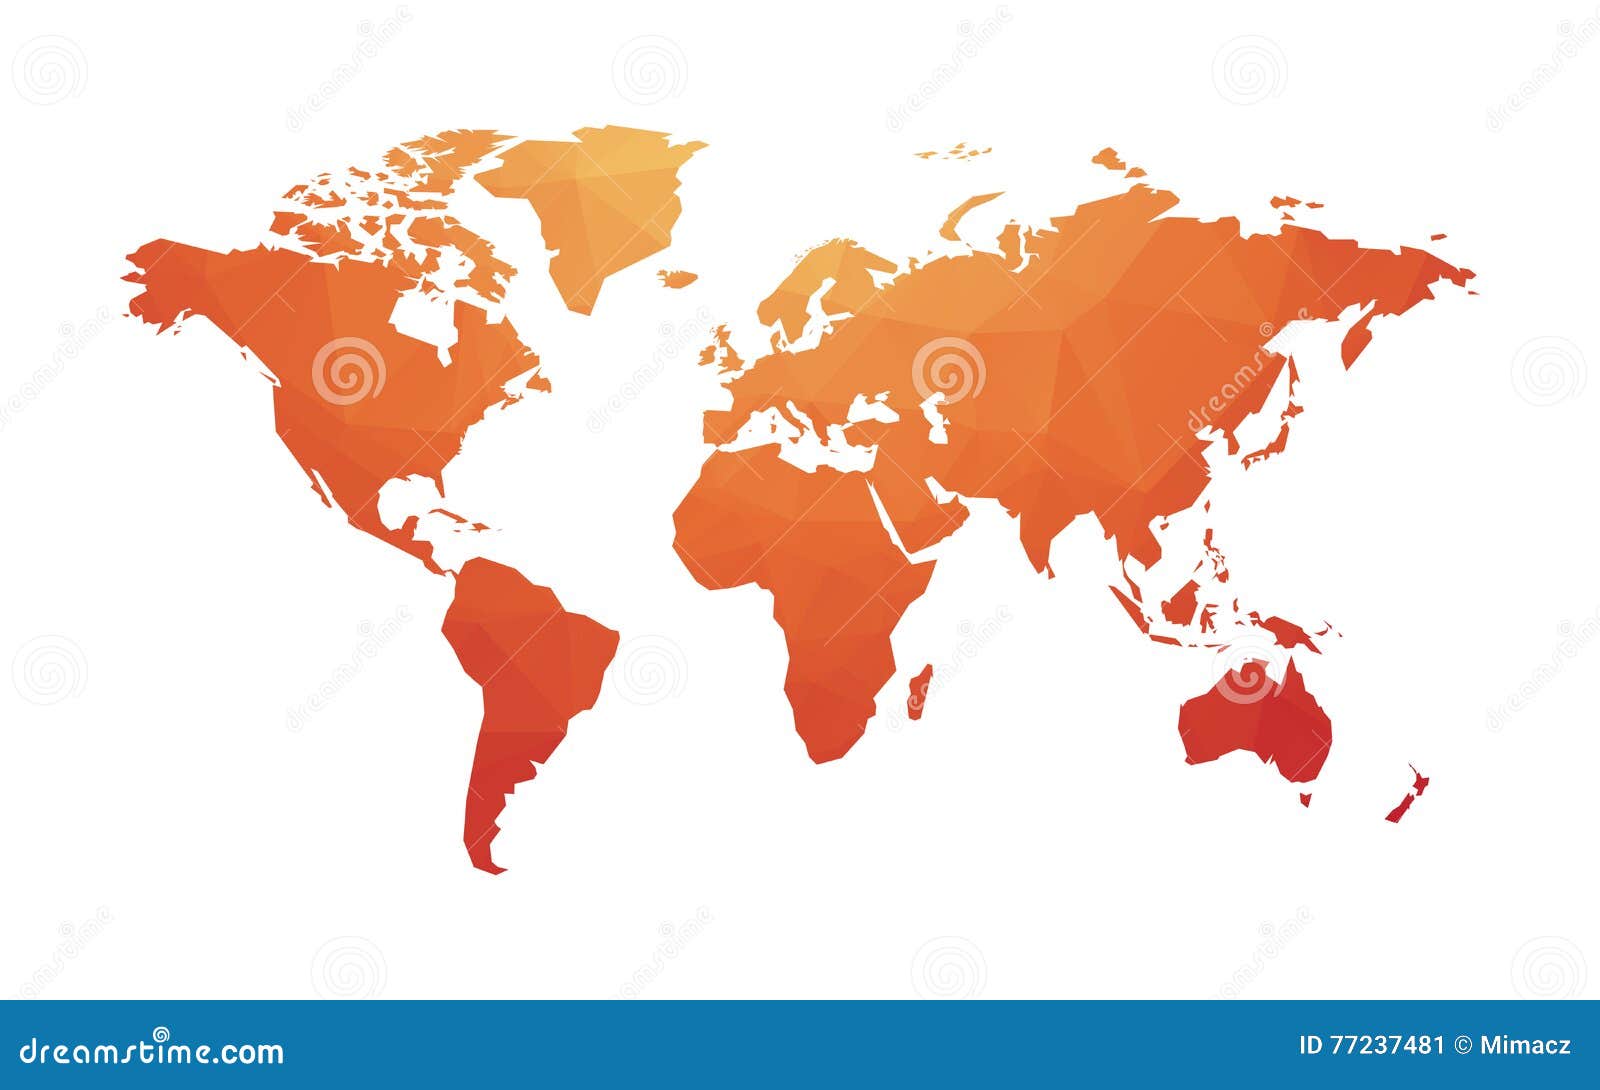 Red orange map of world stock illustration. Illustration of america ...